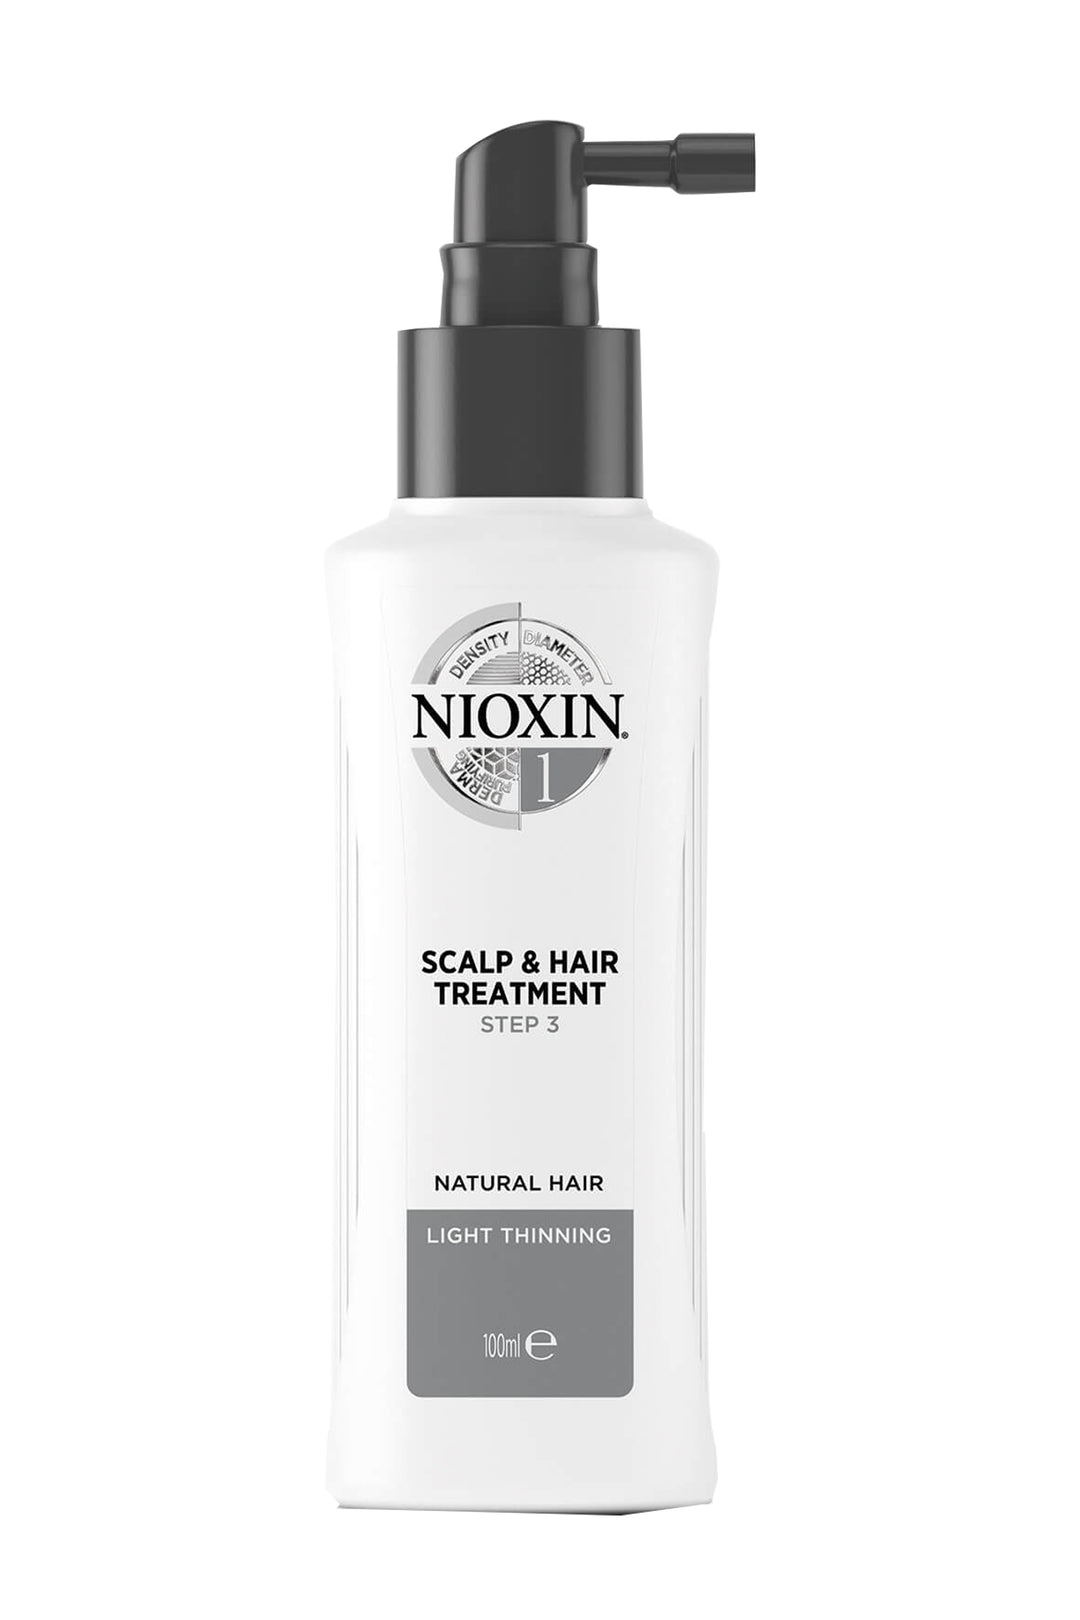 nioxin-system-1-scalp-and-hair-treatment-100ml--100ml